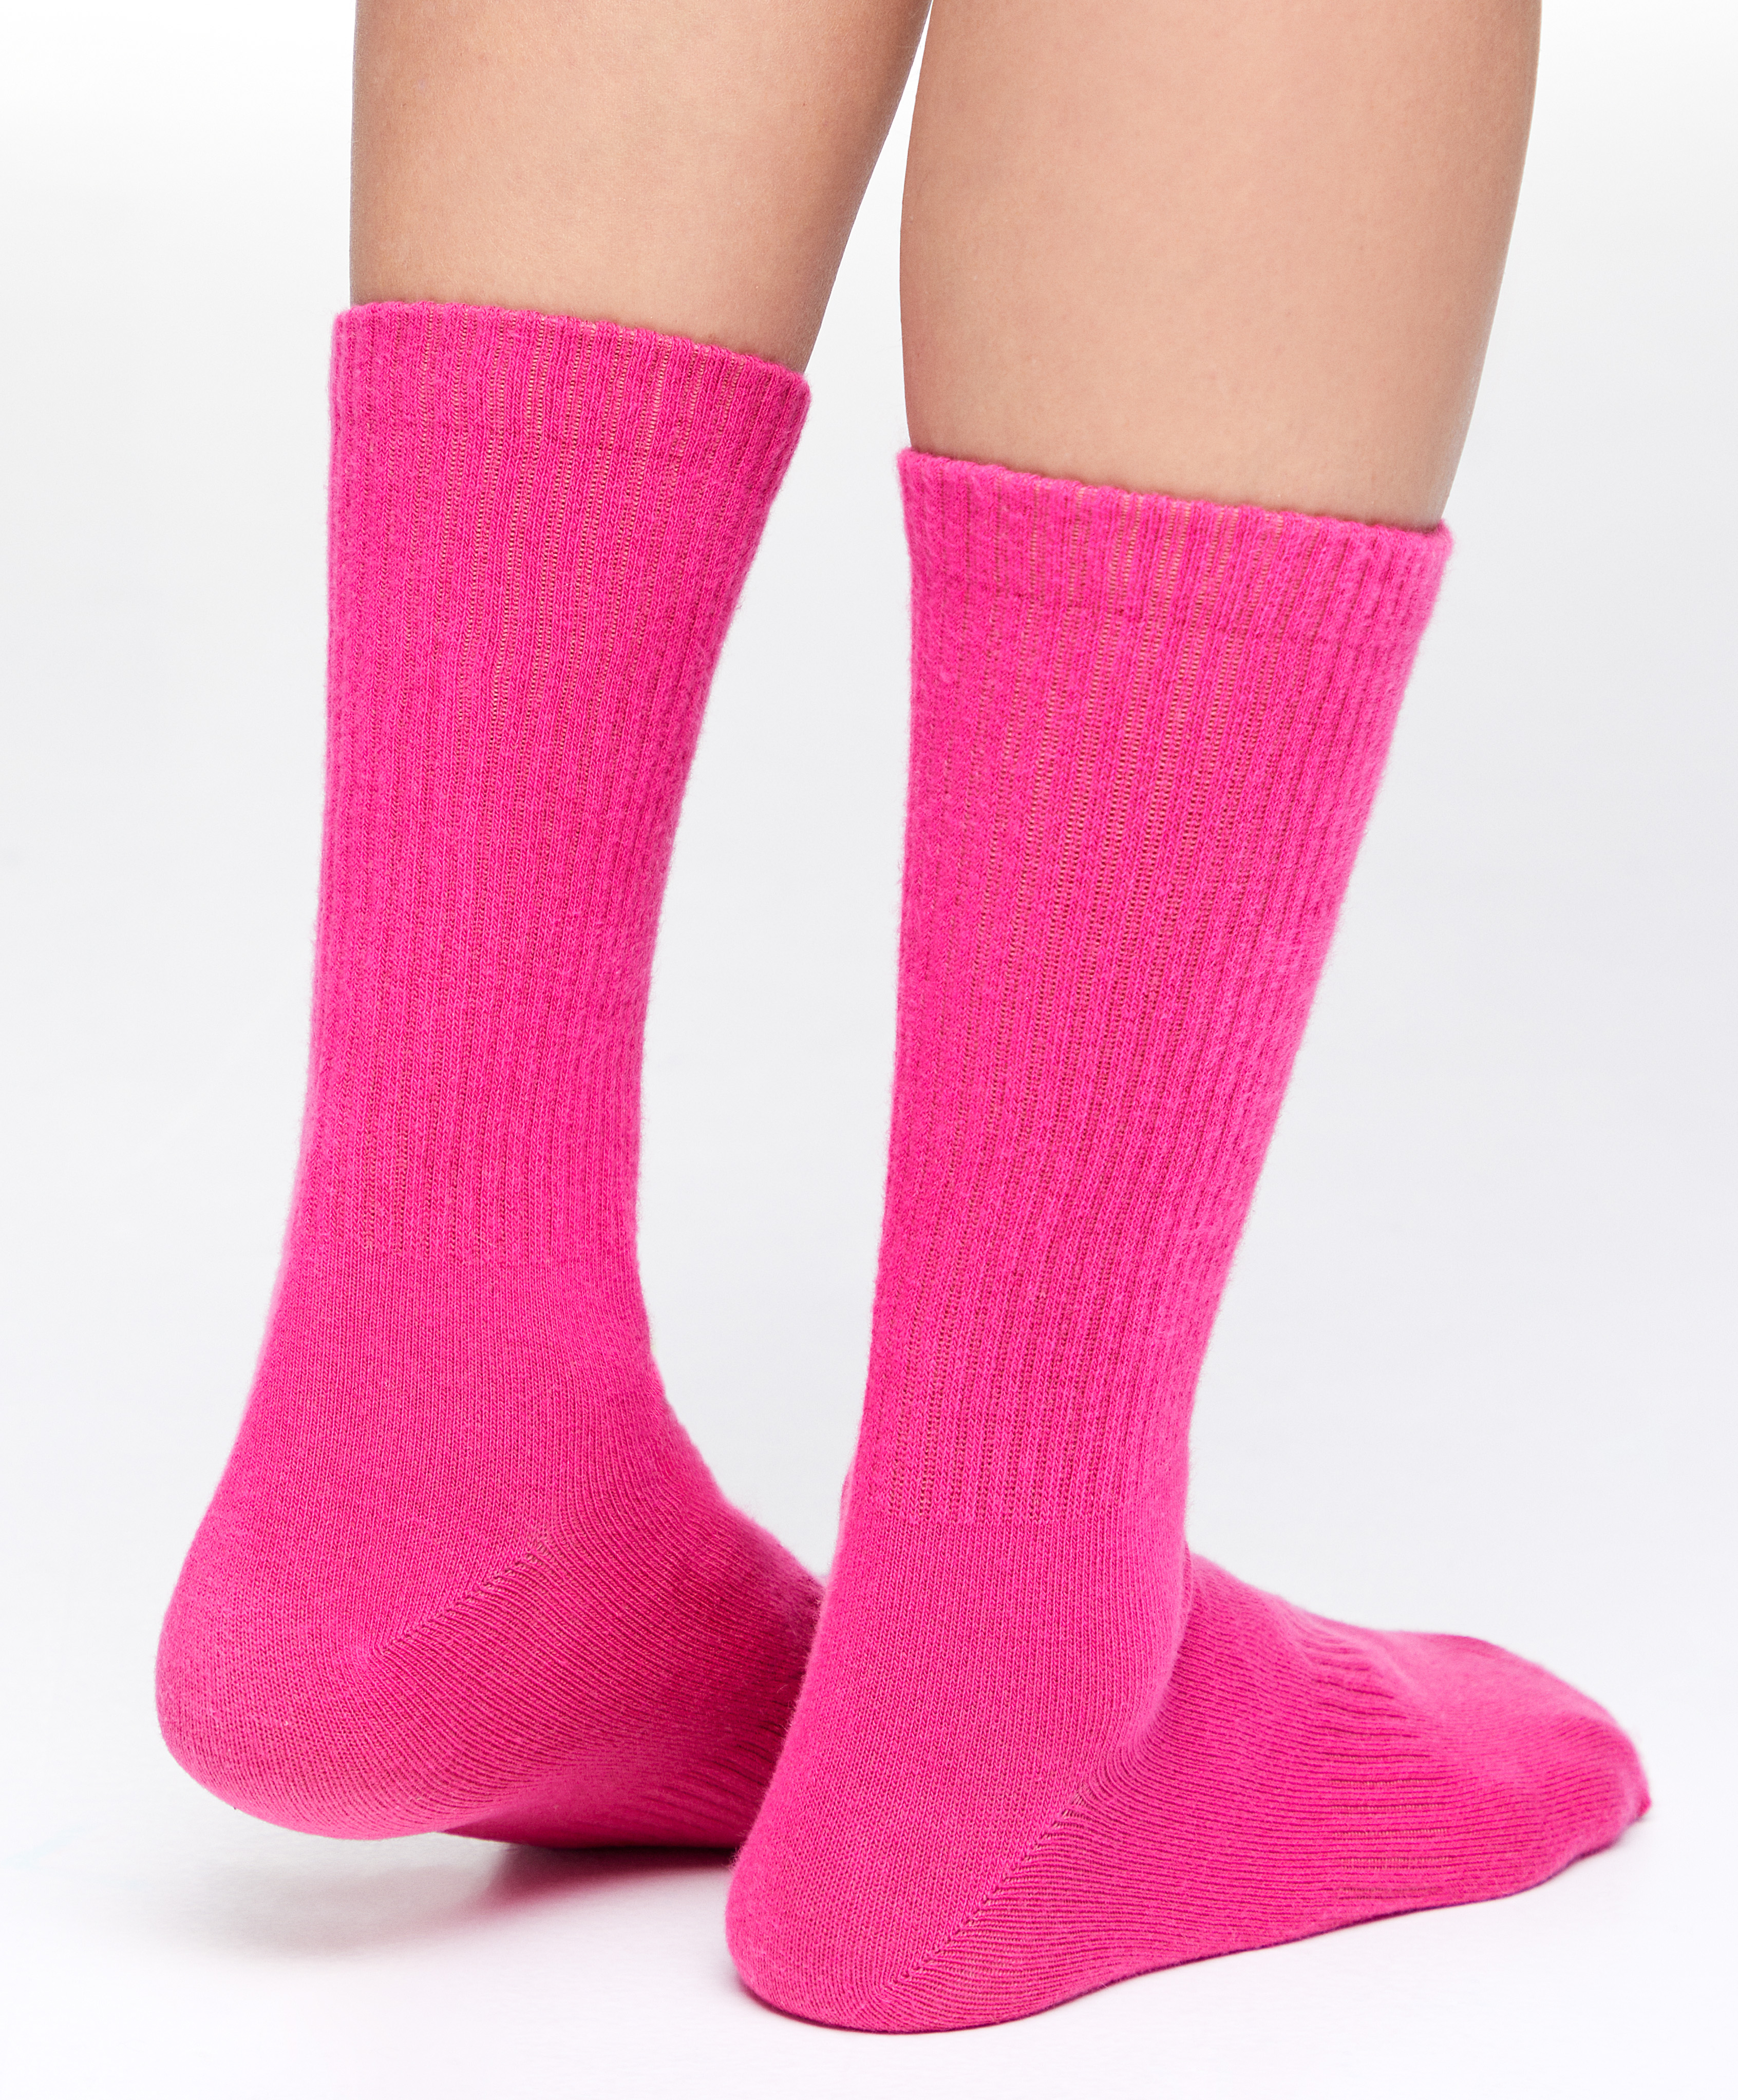 Cotton sports classic socks